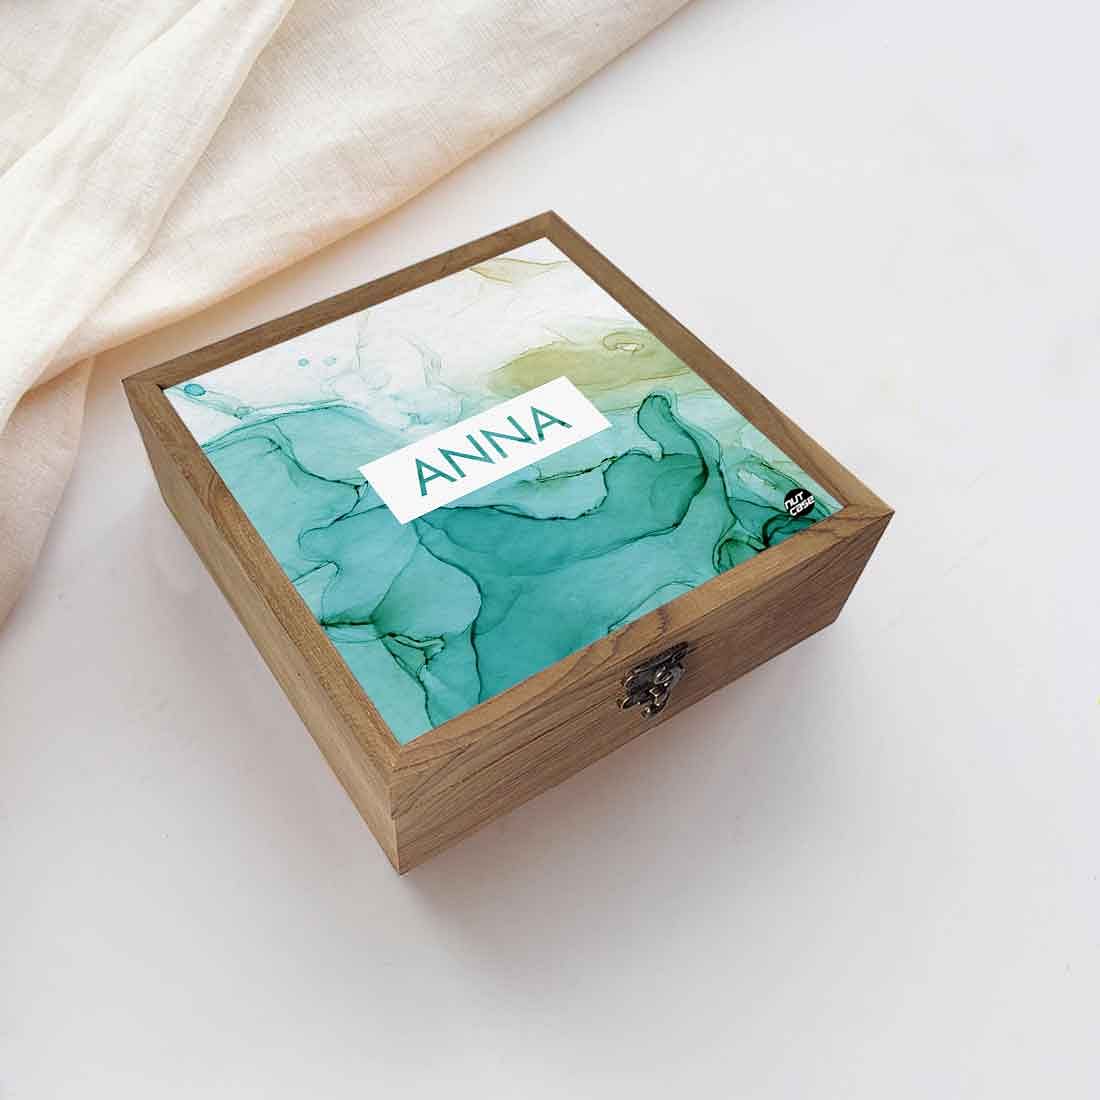 Customized Accessories Box Organizer - Green Ink Watercolor Nutcase